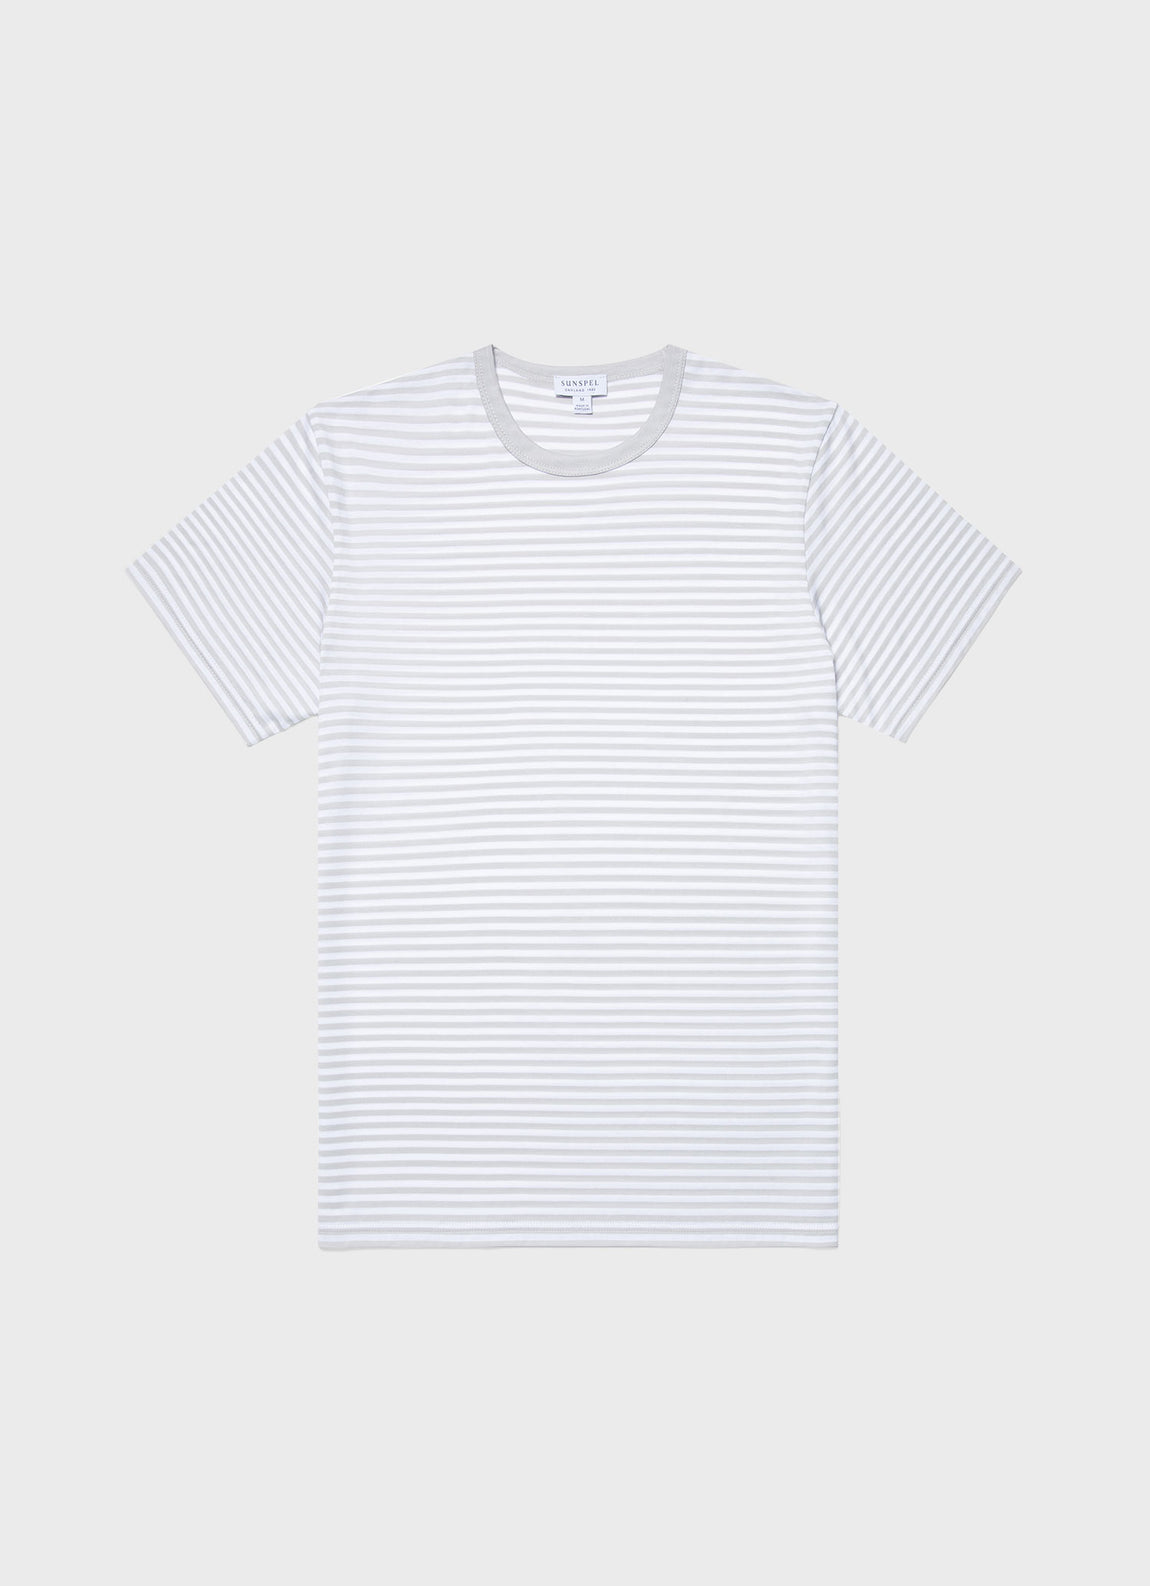 Men's Classic T-shirt in Smoke/White English Stripe | Sunspel